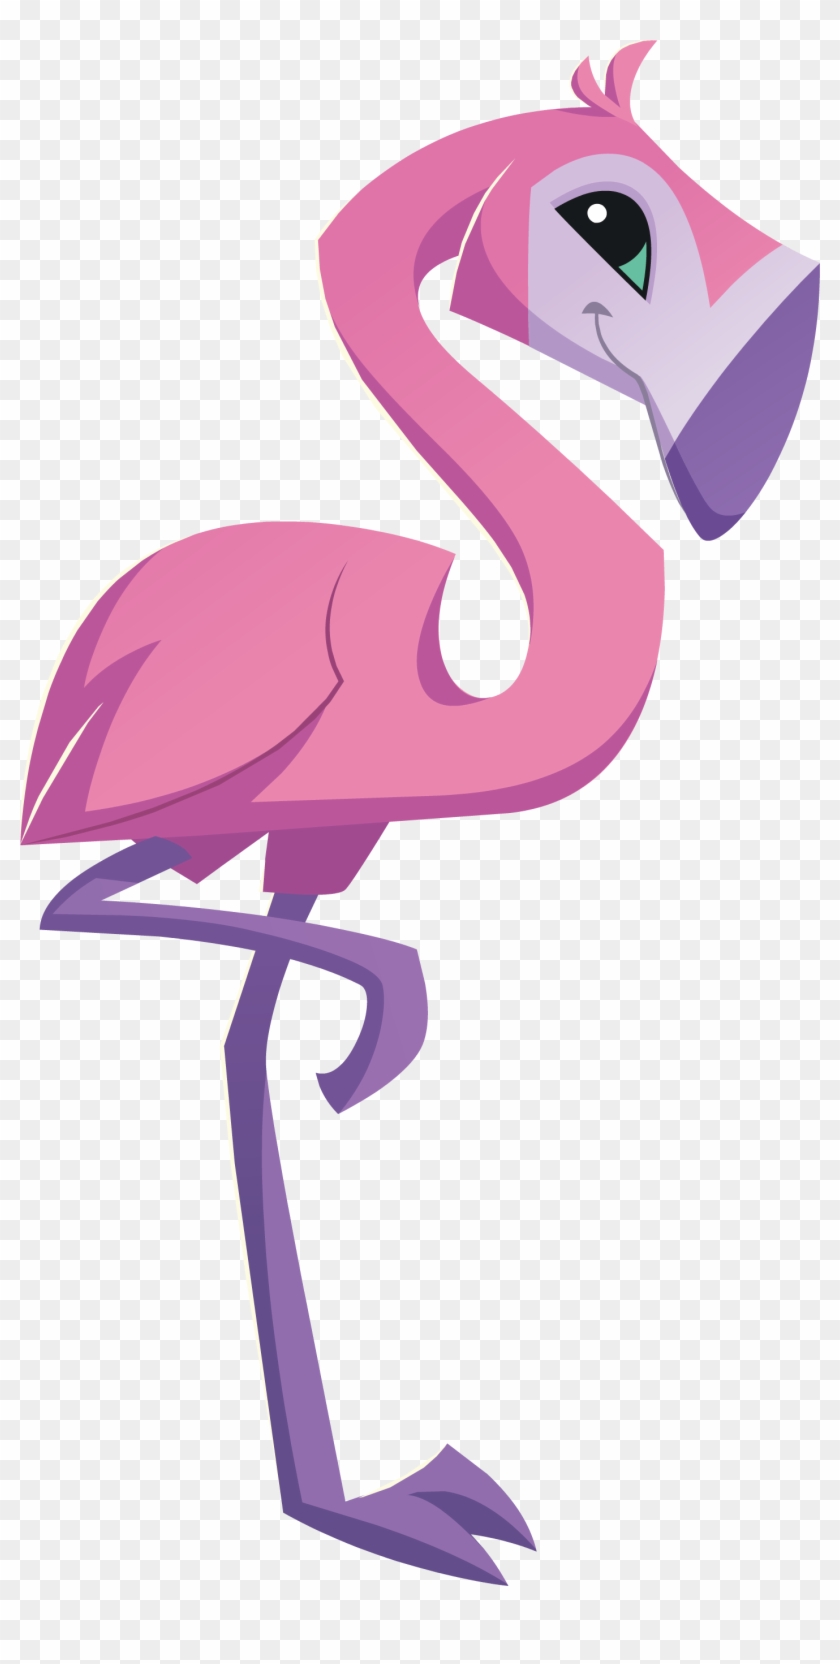 Flamingo Graphic - Animal Jam Flamingo Png #365195